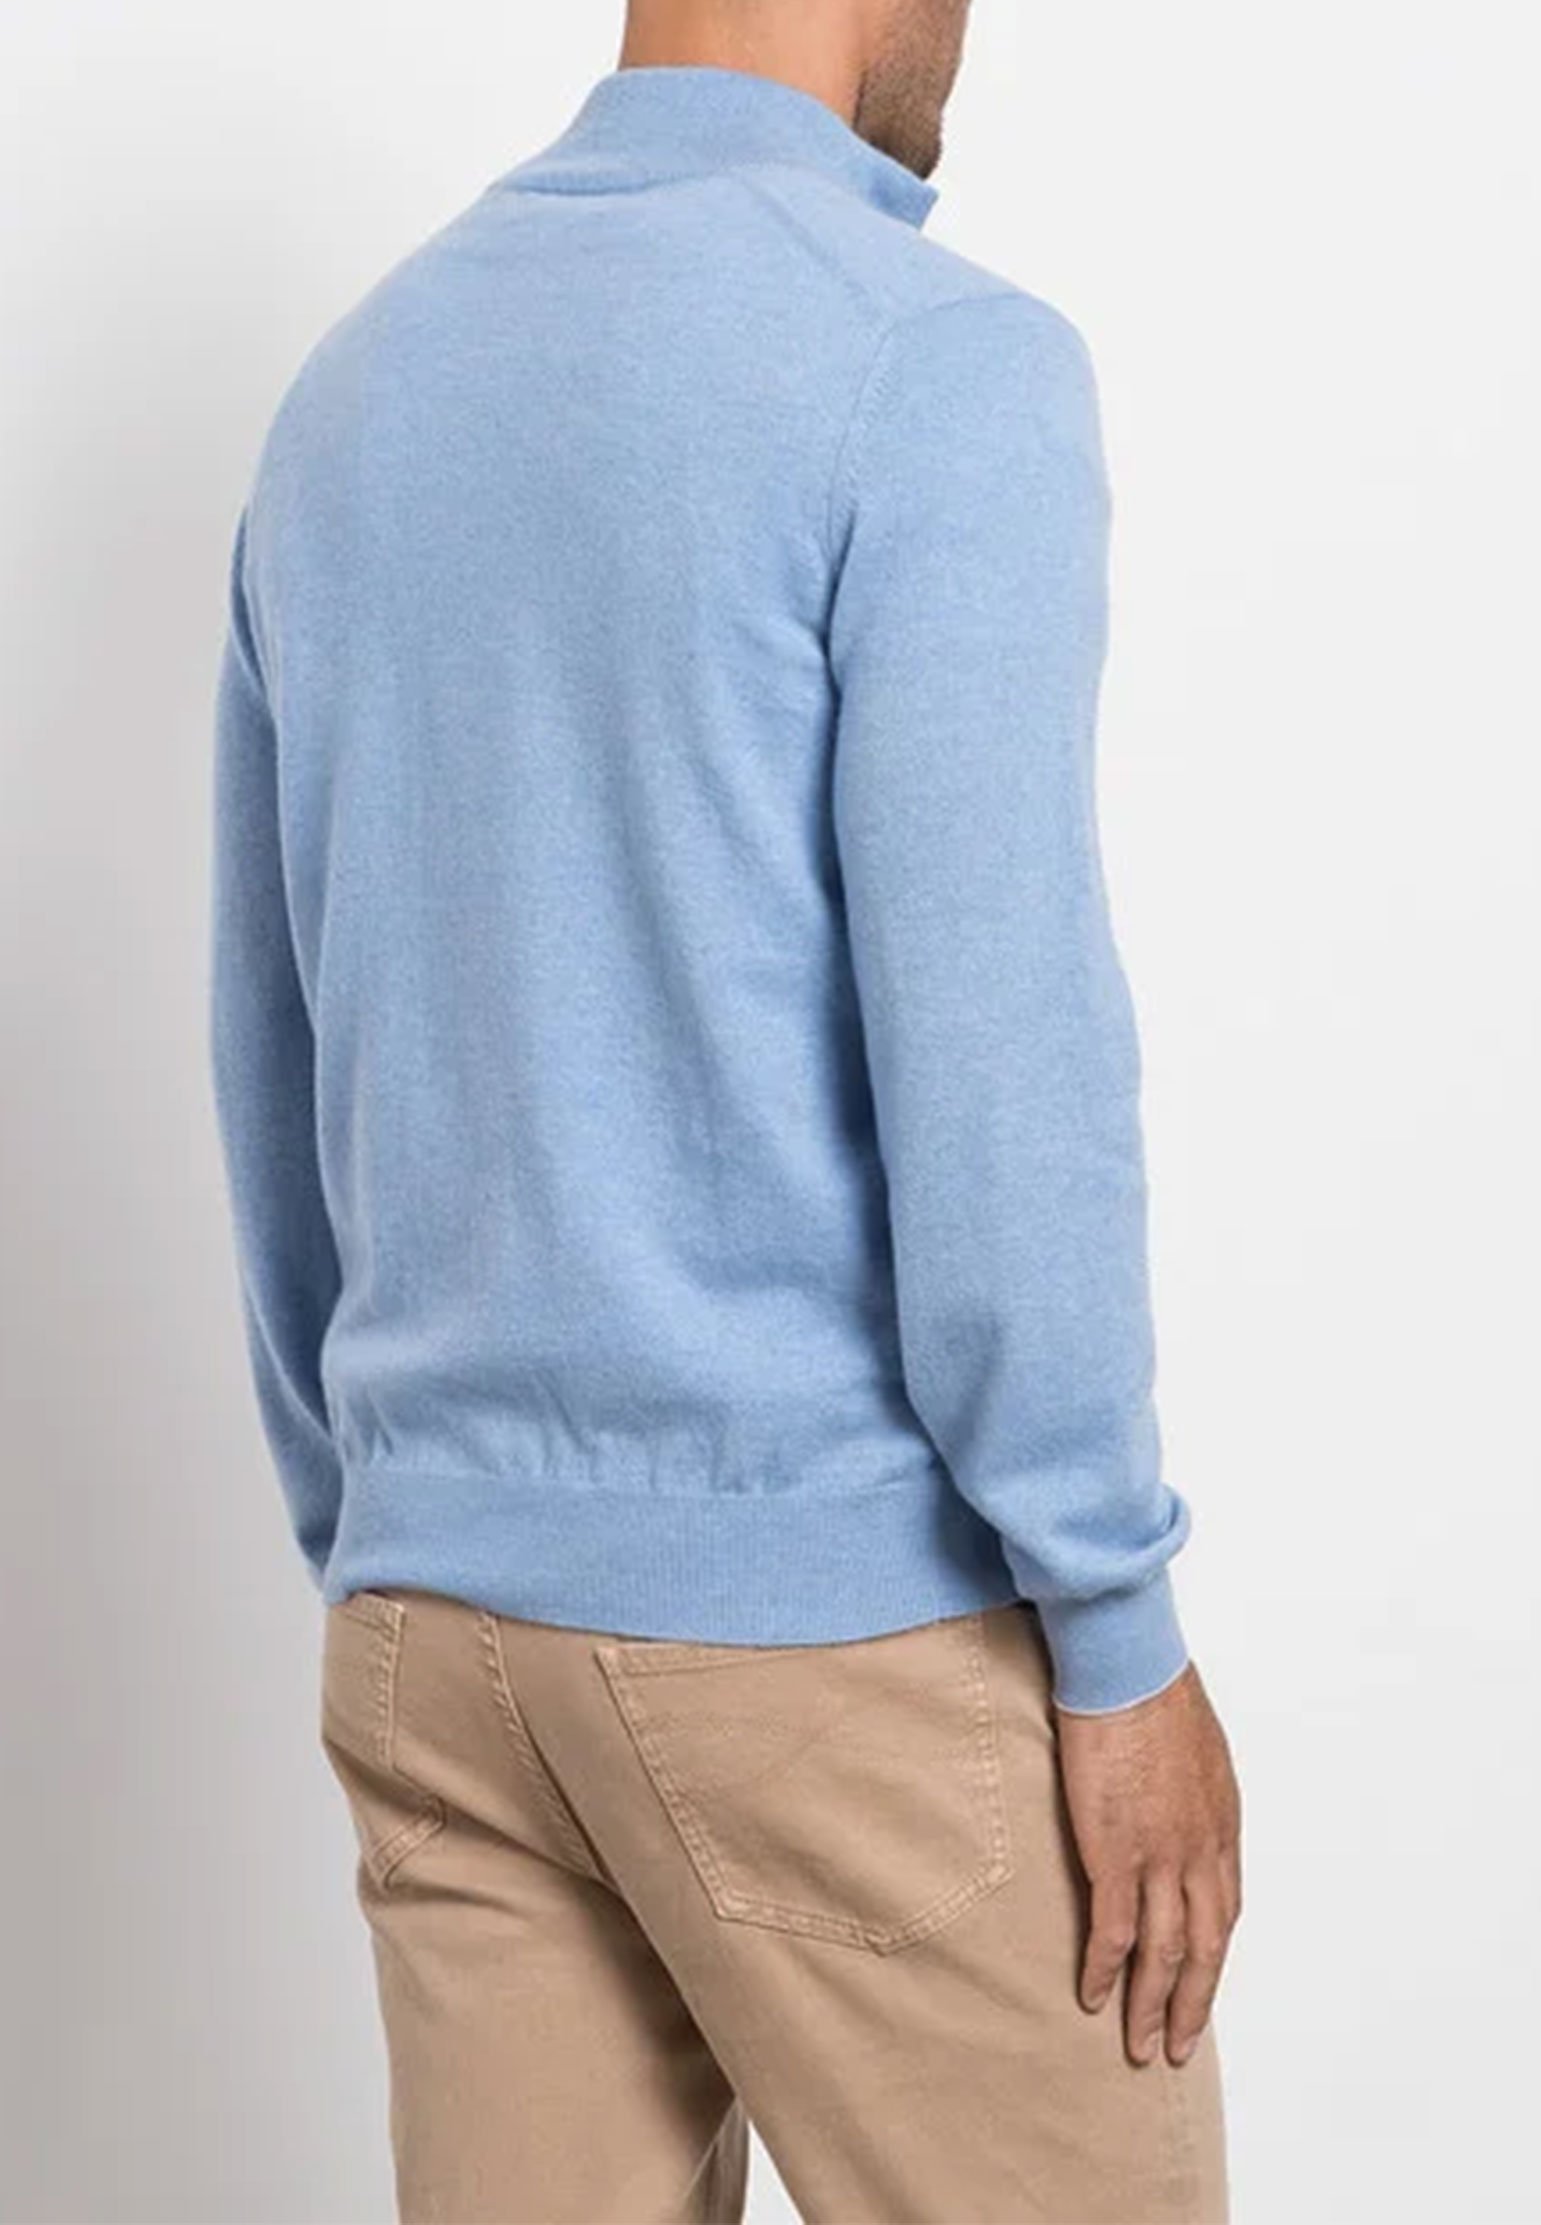 Sweater BRUNELLO CUCINELLI Color: blue (Code: 3467) in online store Allure